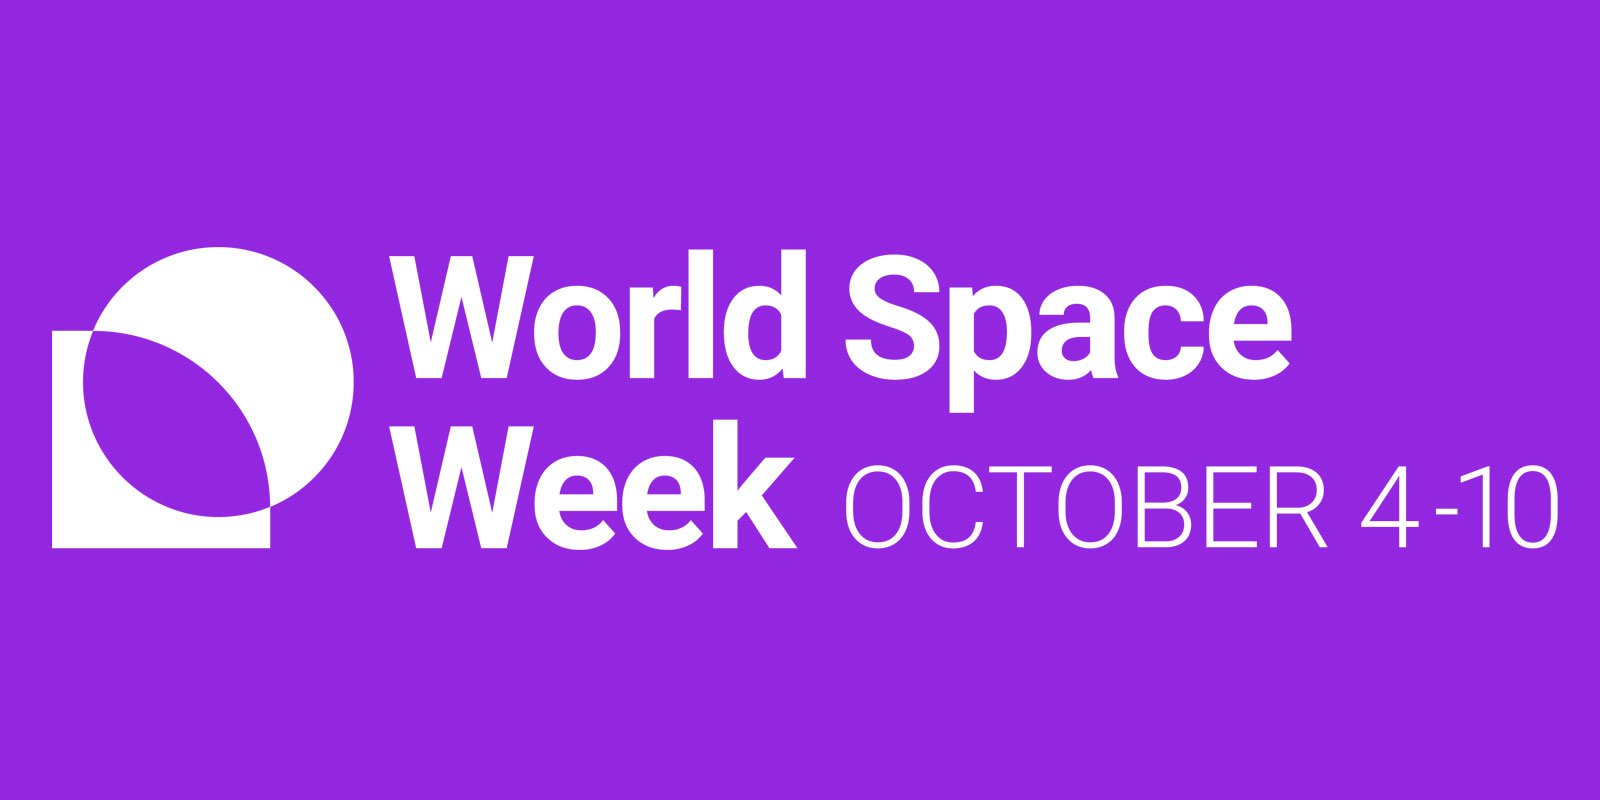 World Space Week logo